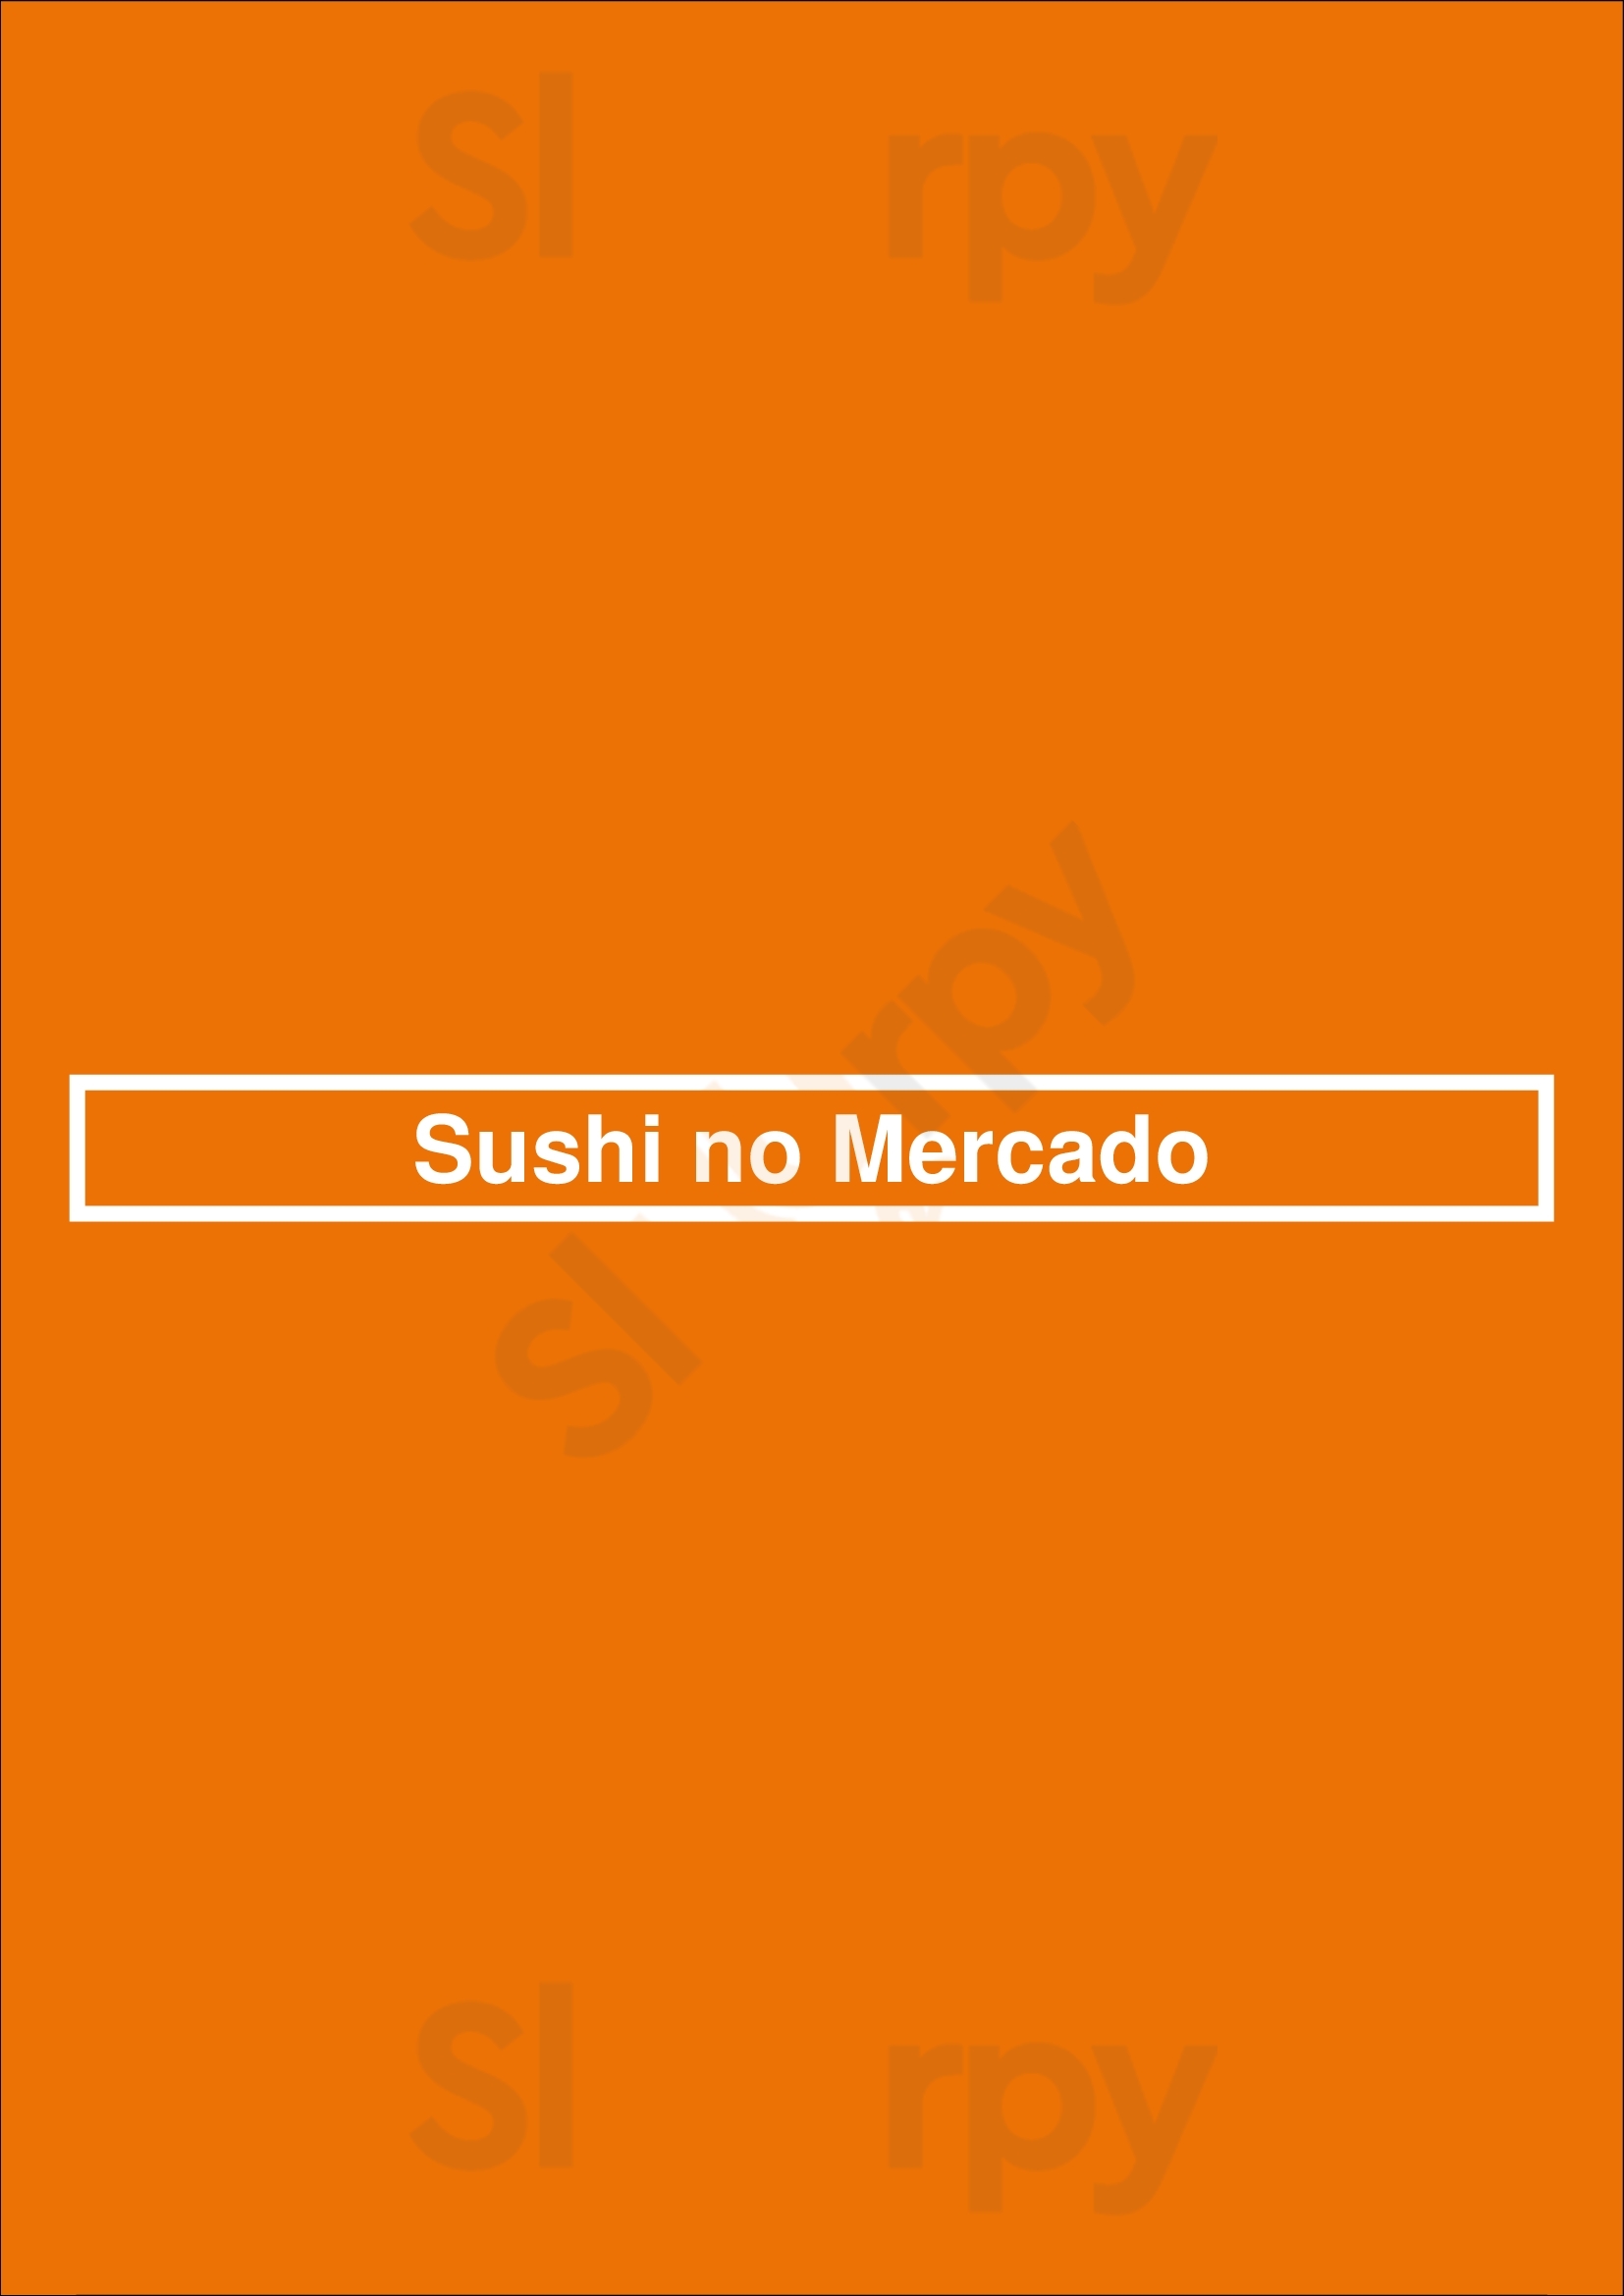 Sushi No Mercado Matosinhos Menu - 1